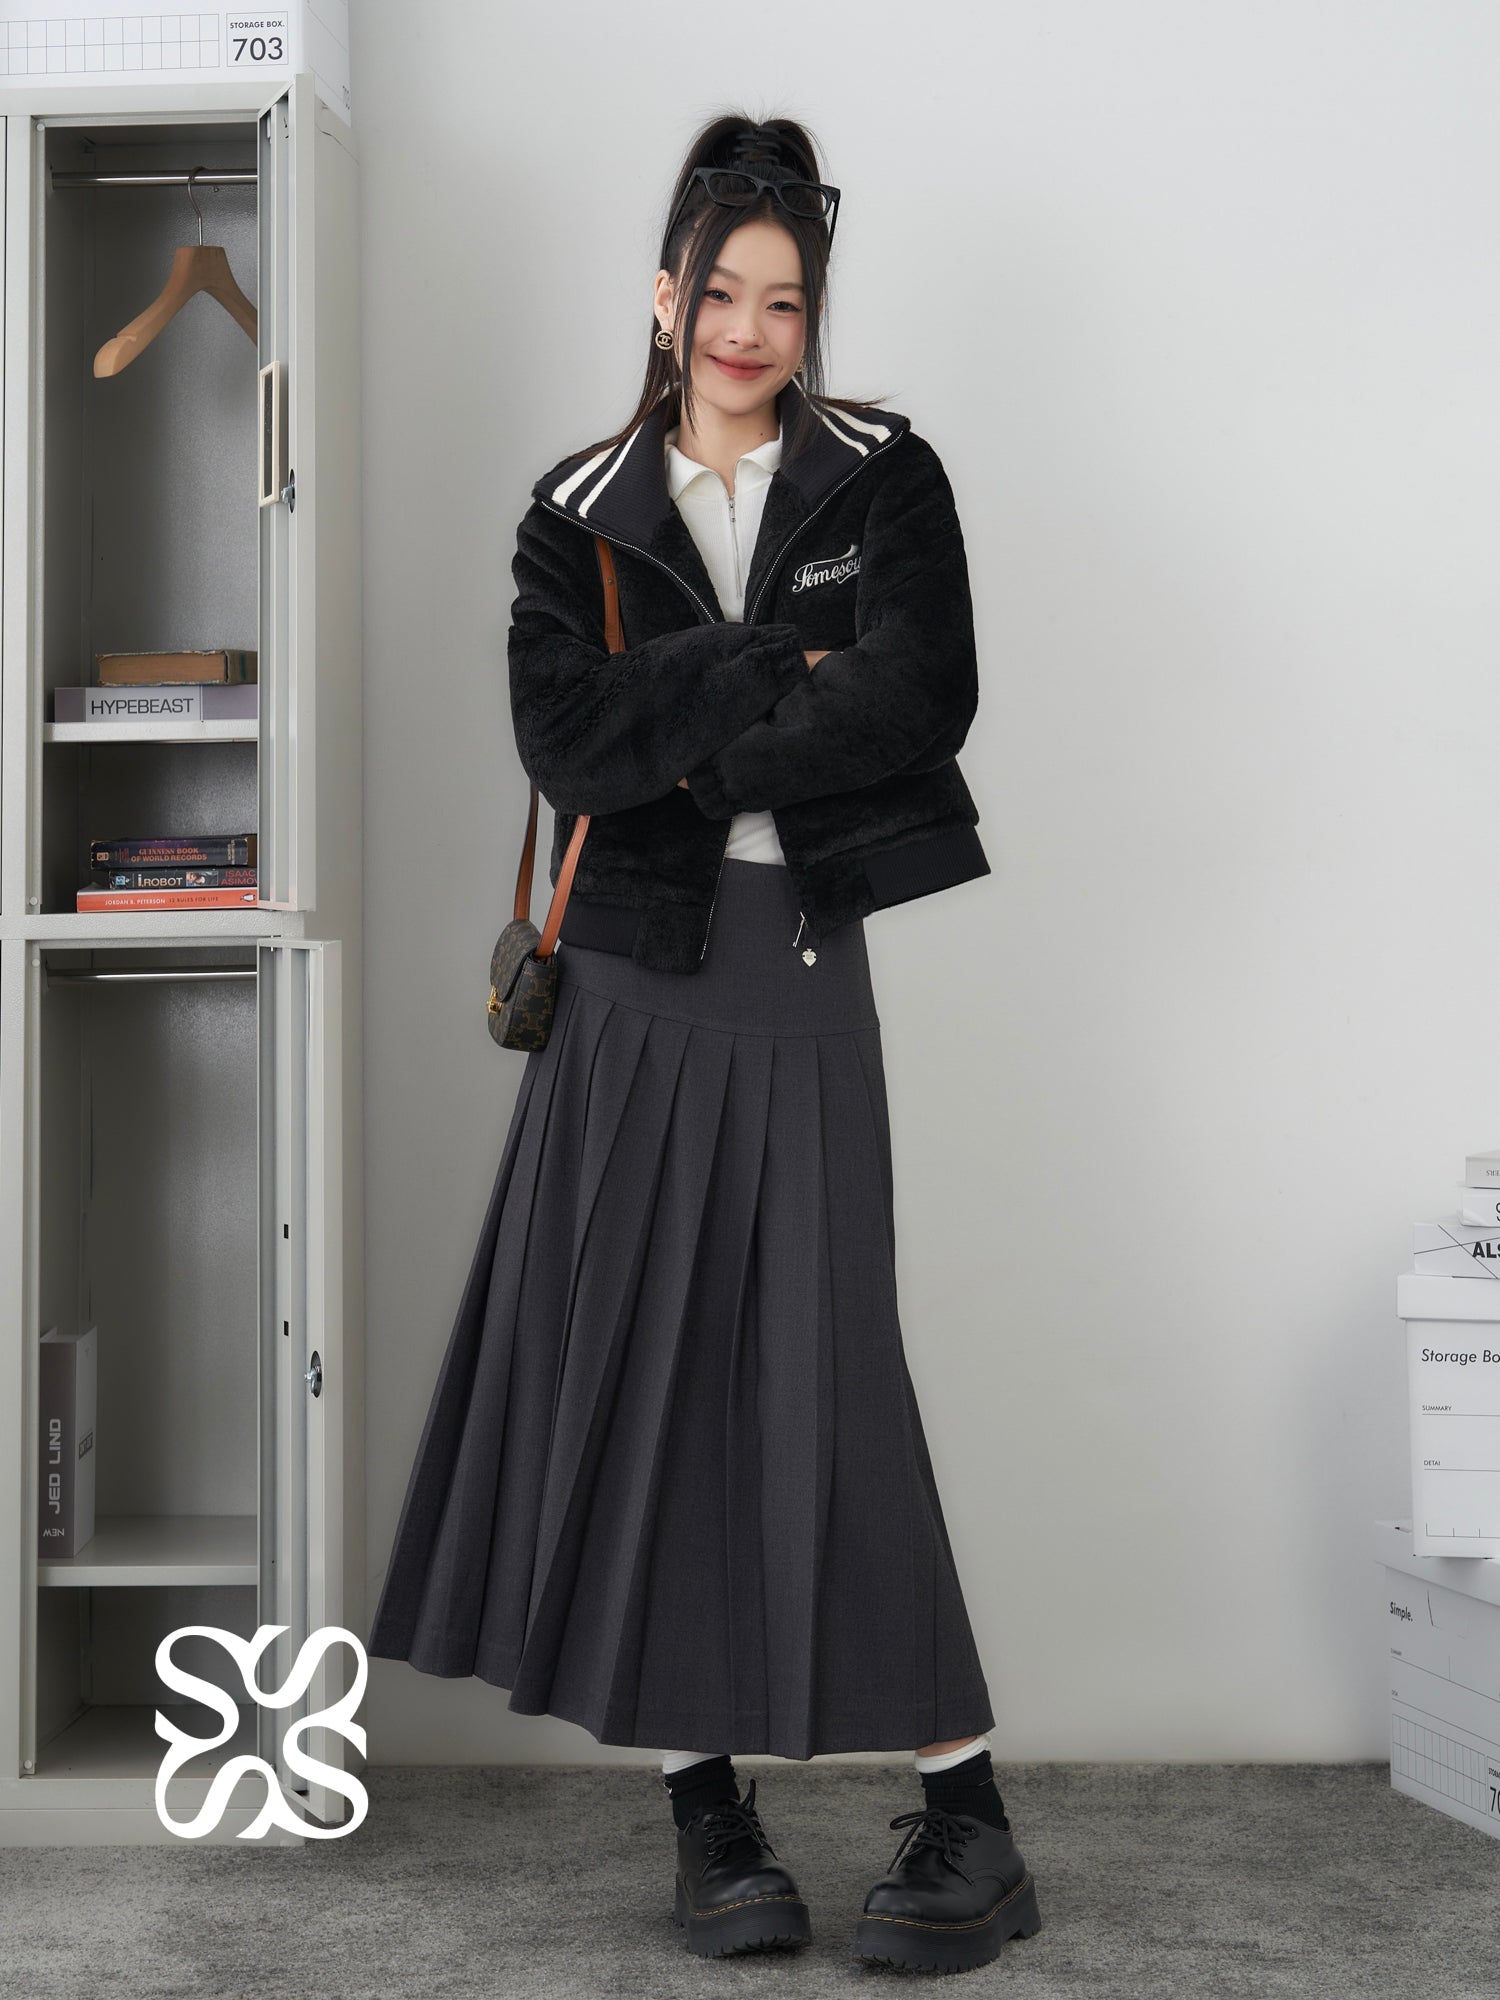 SOMESOWE Grey Academy Pleated Skirt | MADA IN CHINA